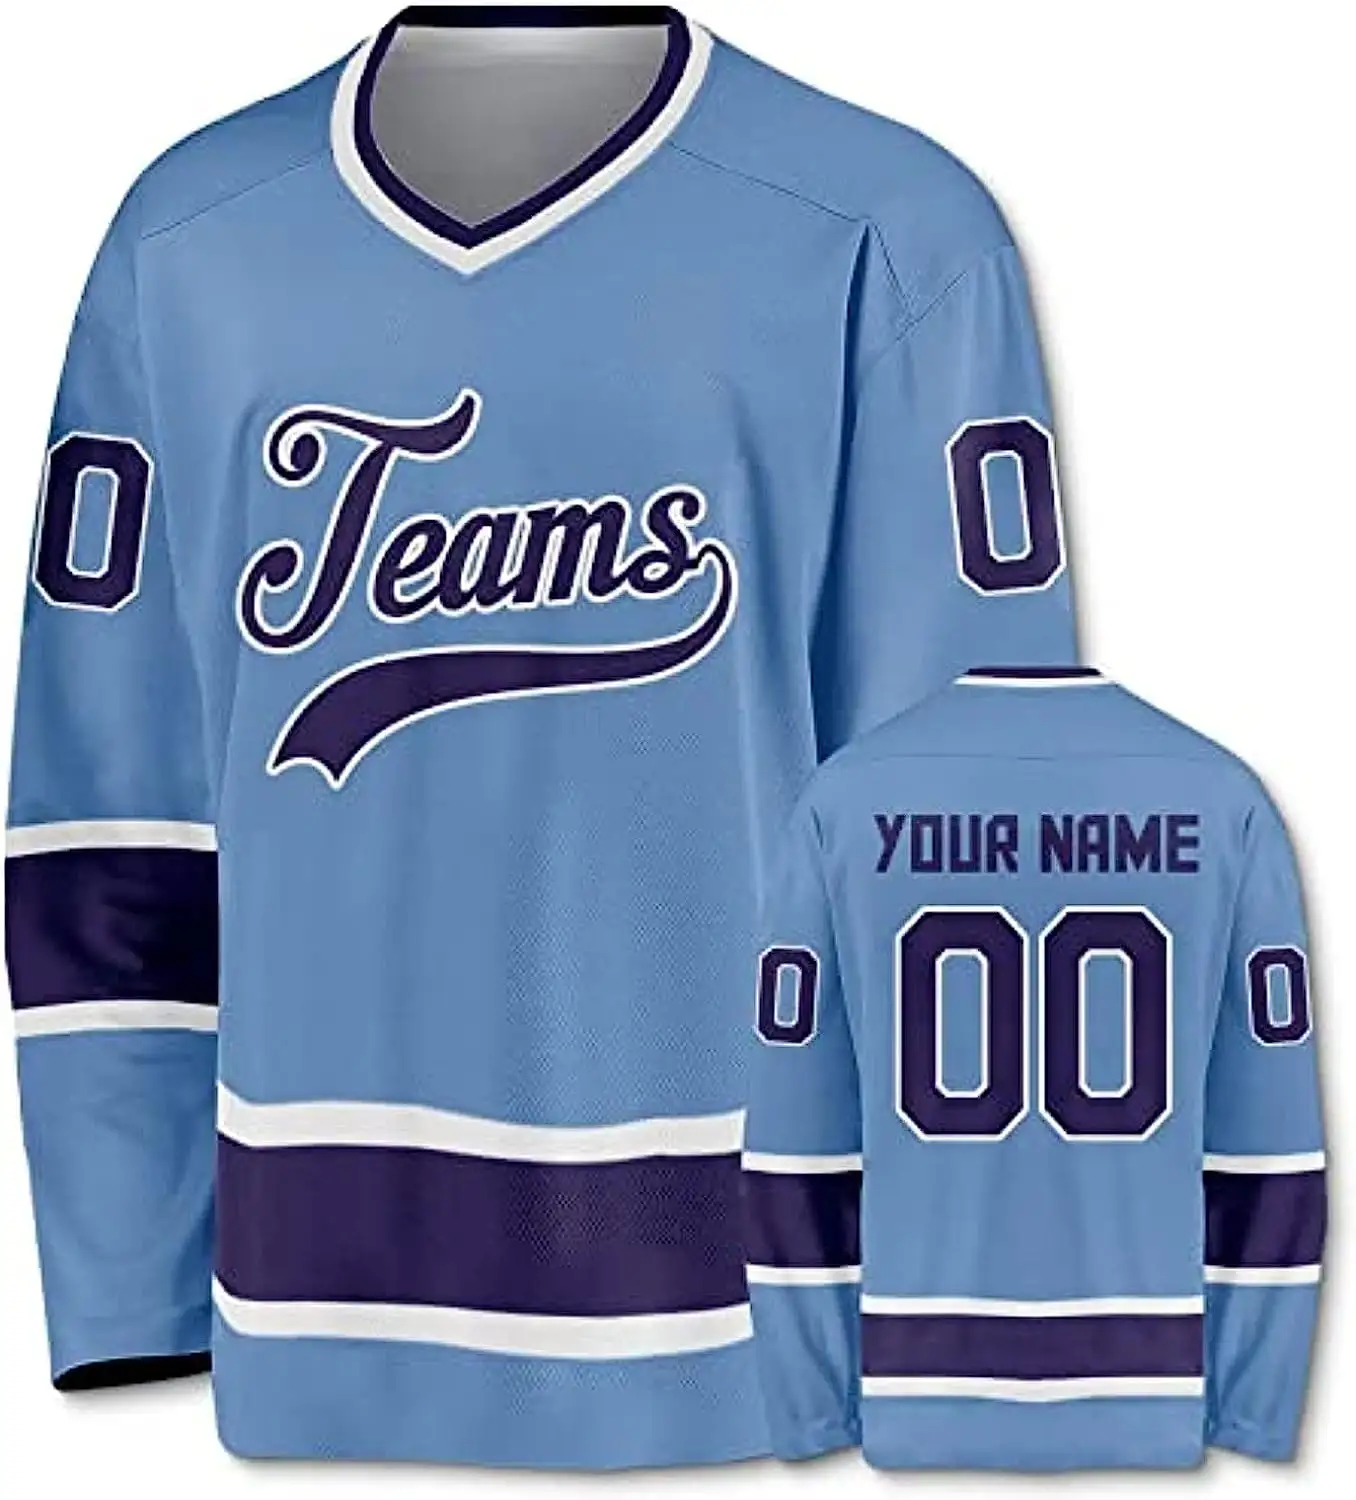 2023 Stitched Sports Ice Hockey Jerseys Blue Applique Embroidered Ice Hockey Uniform